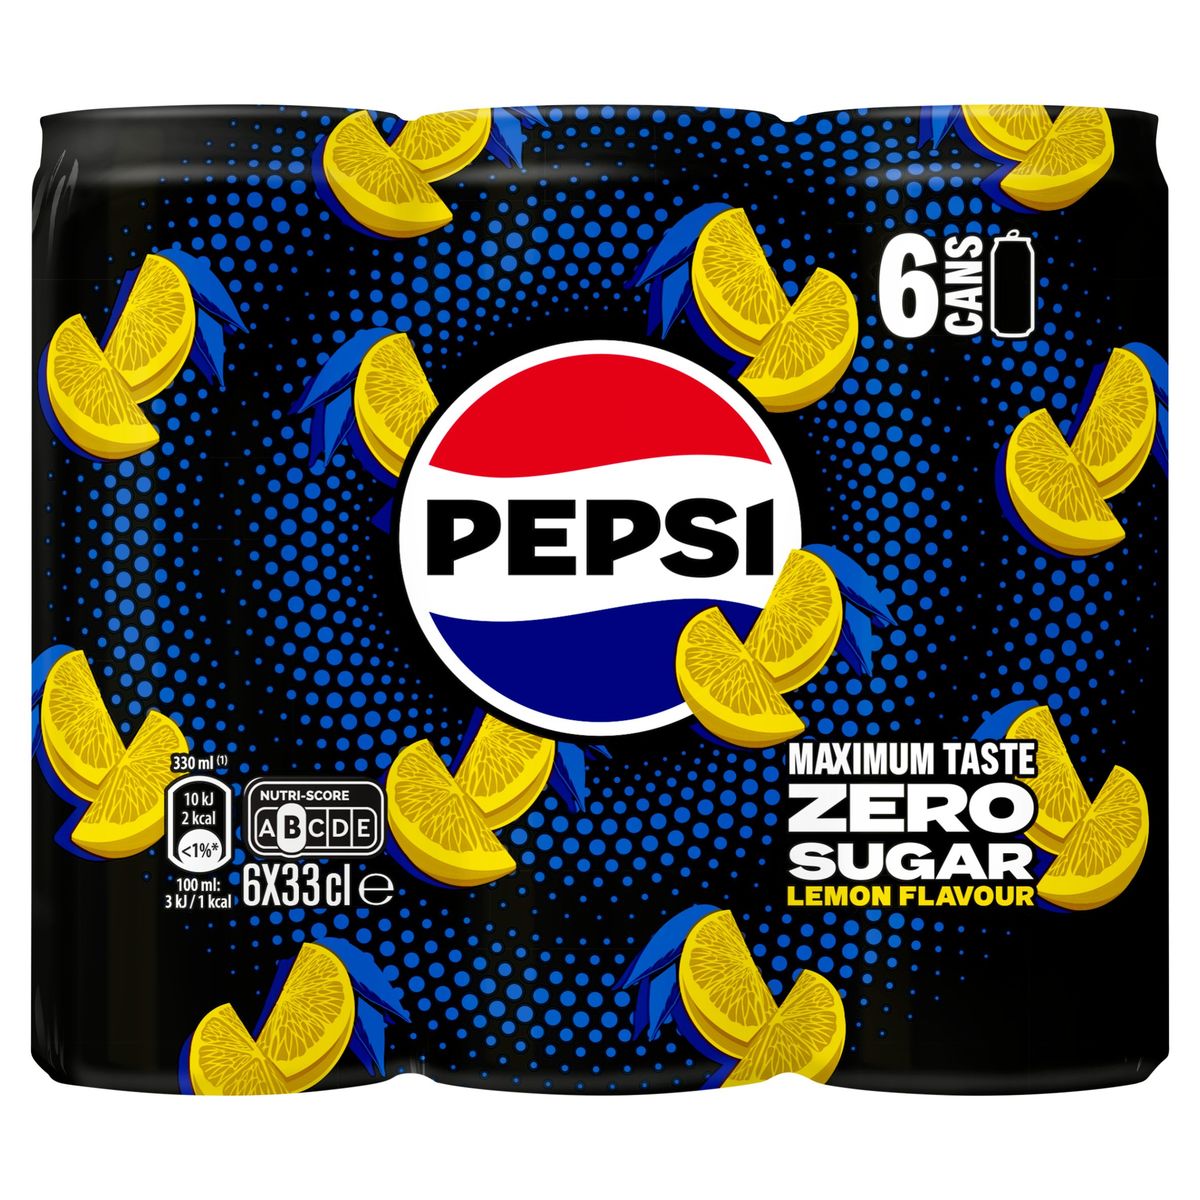 Pepsi Max Cola Lemon 6 x 33 cl